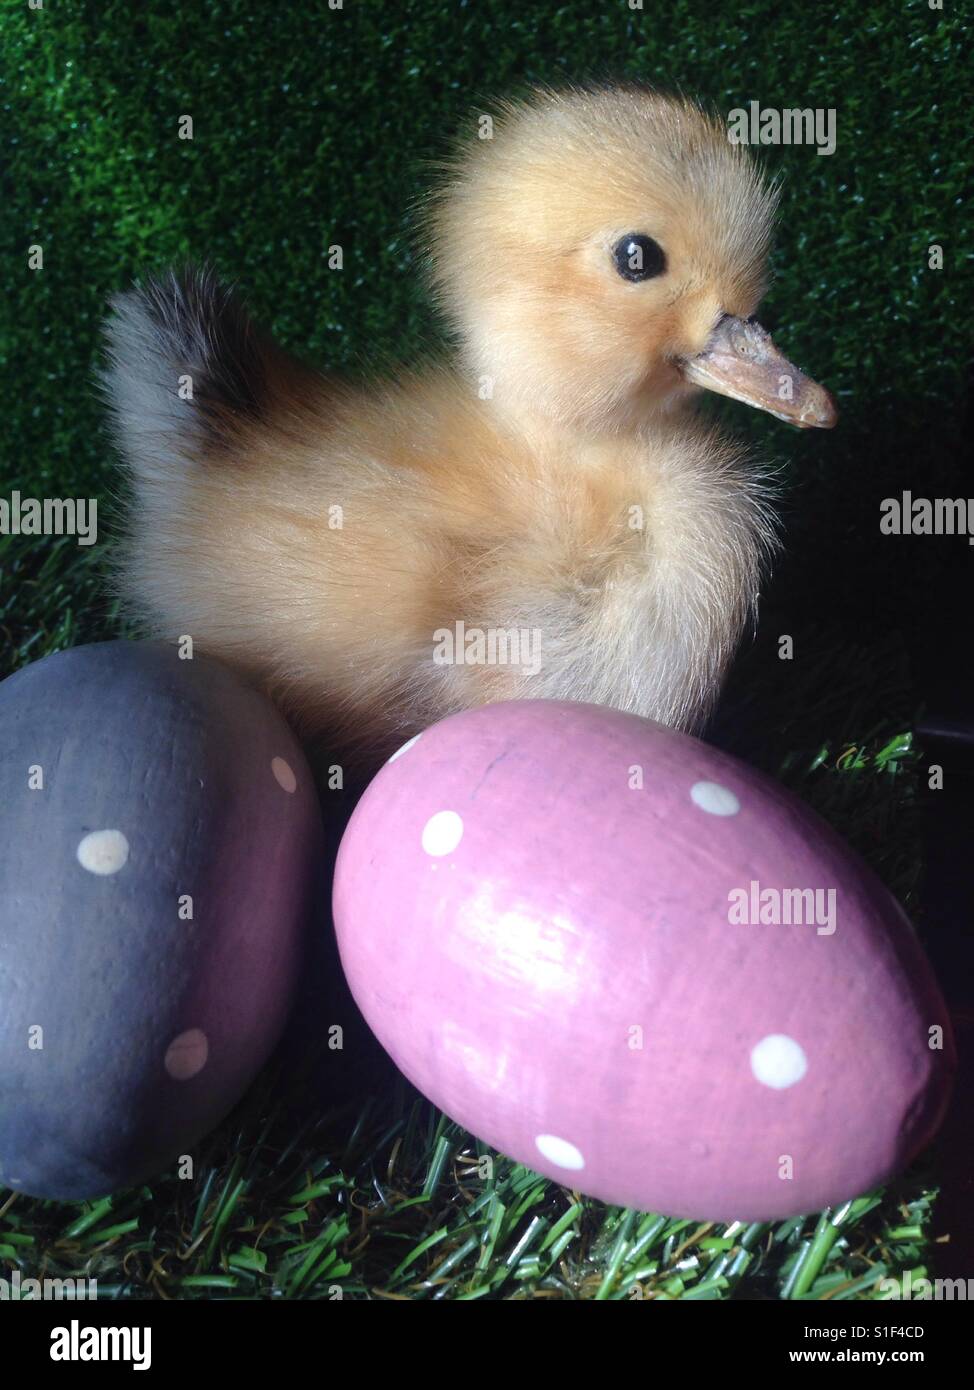 Easter egg hunt duckling chick in garden with polka dot Easter eggs Stock Photo